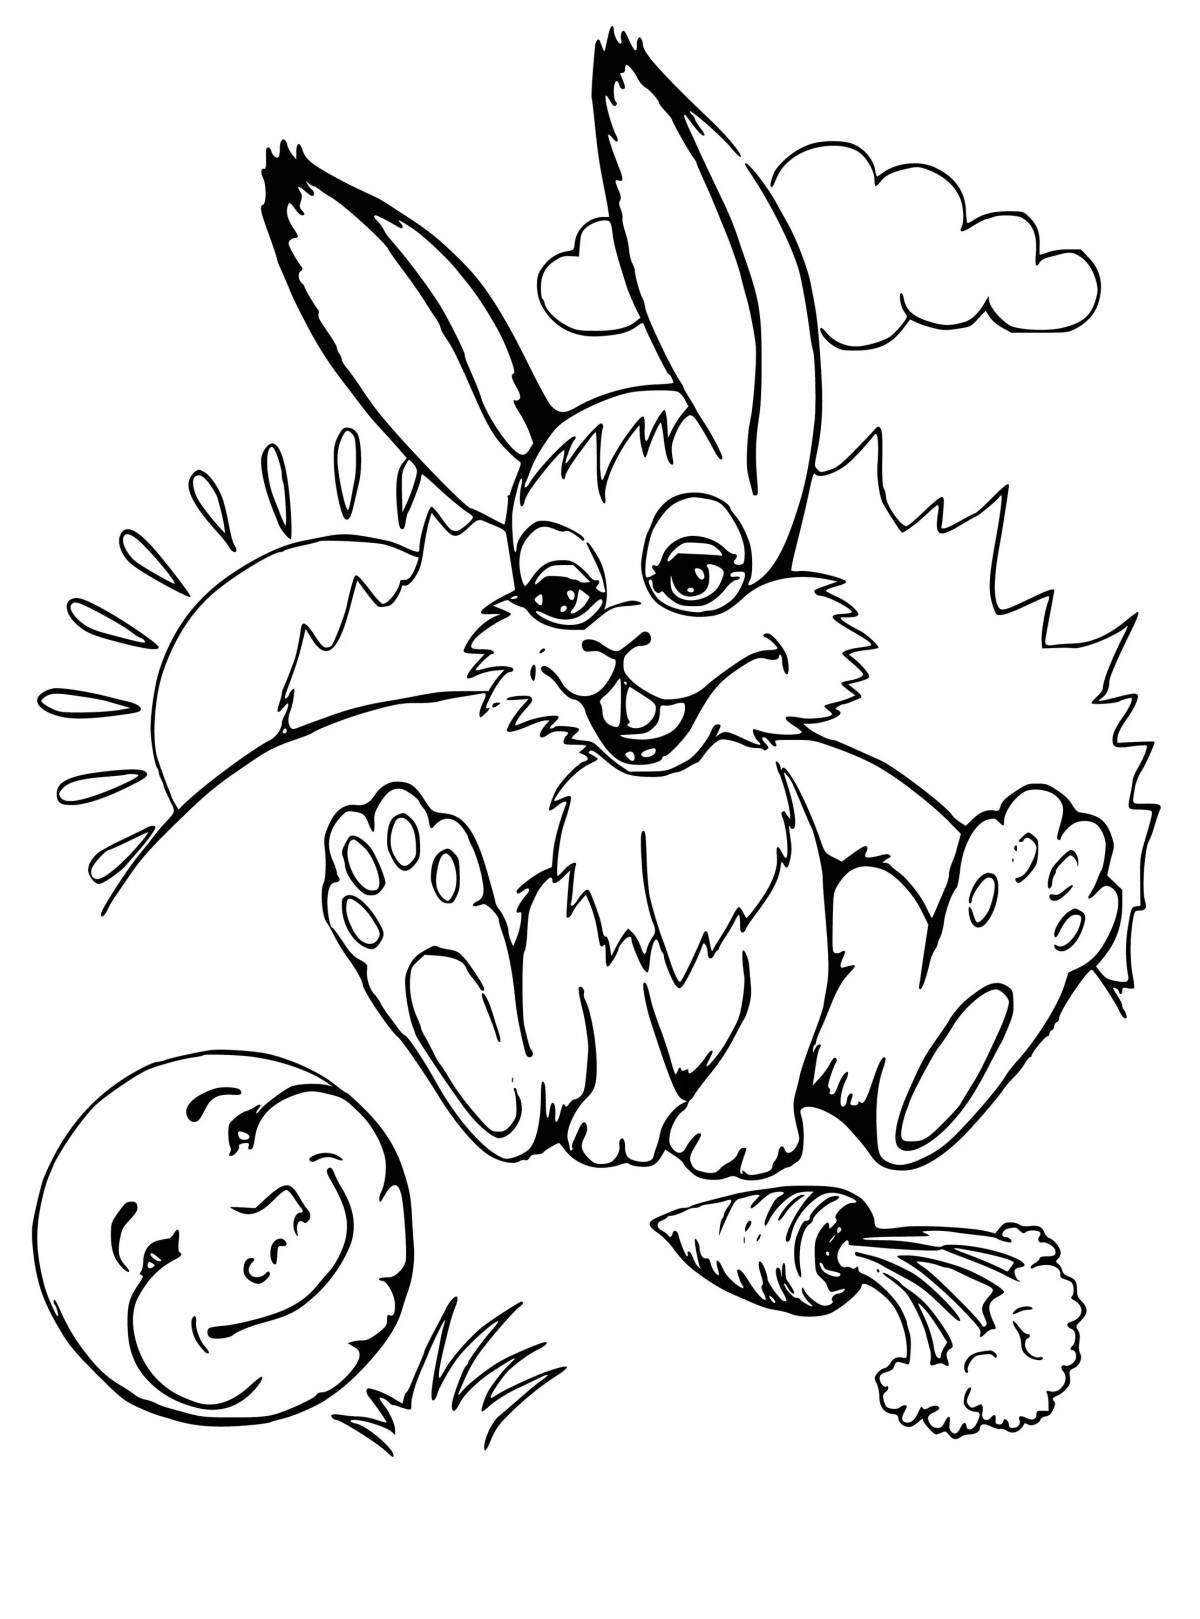 Joyful bunny coloring book